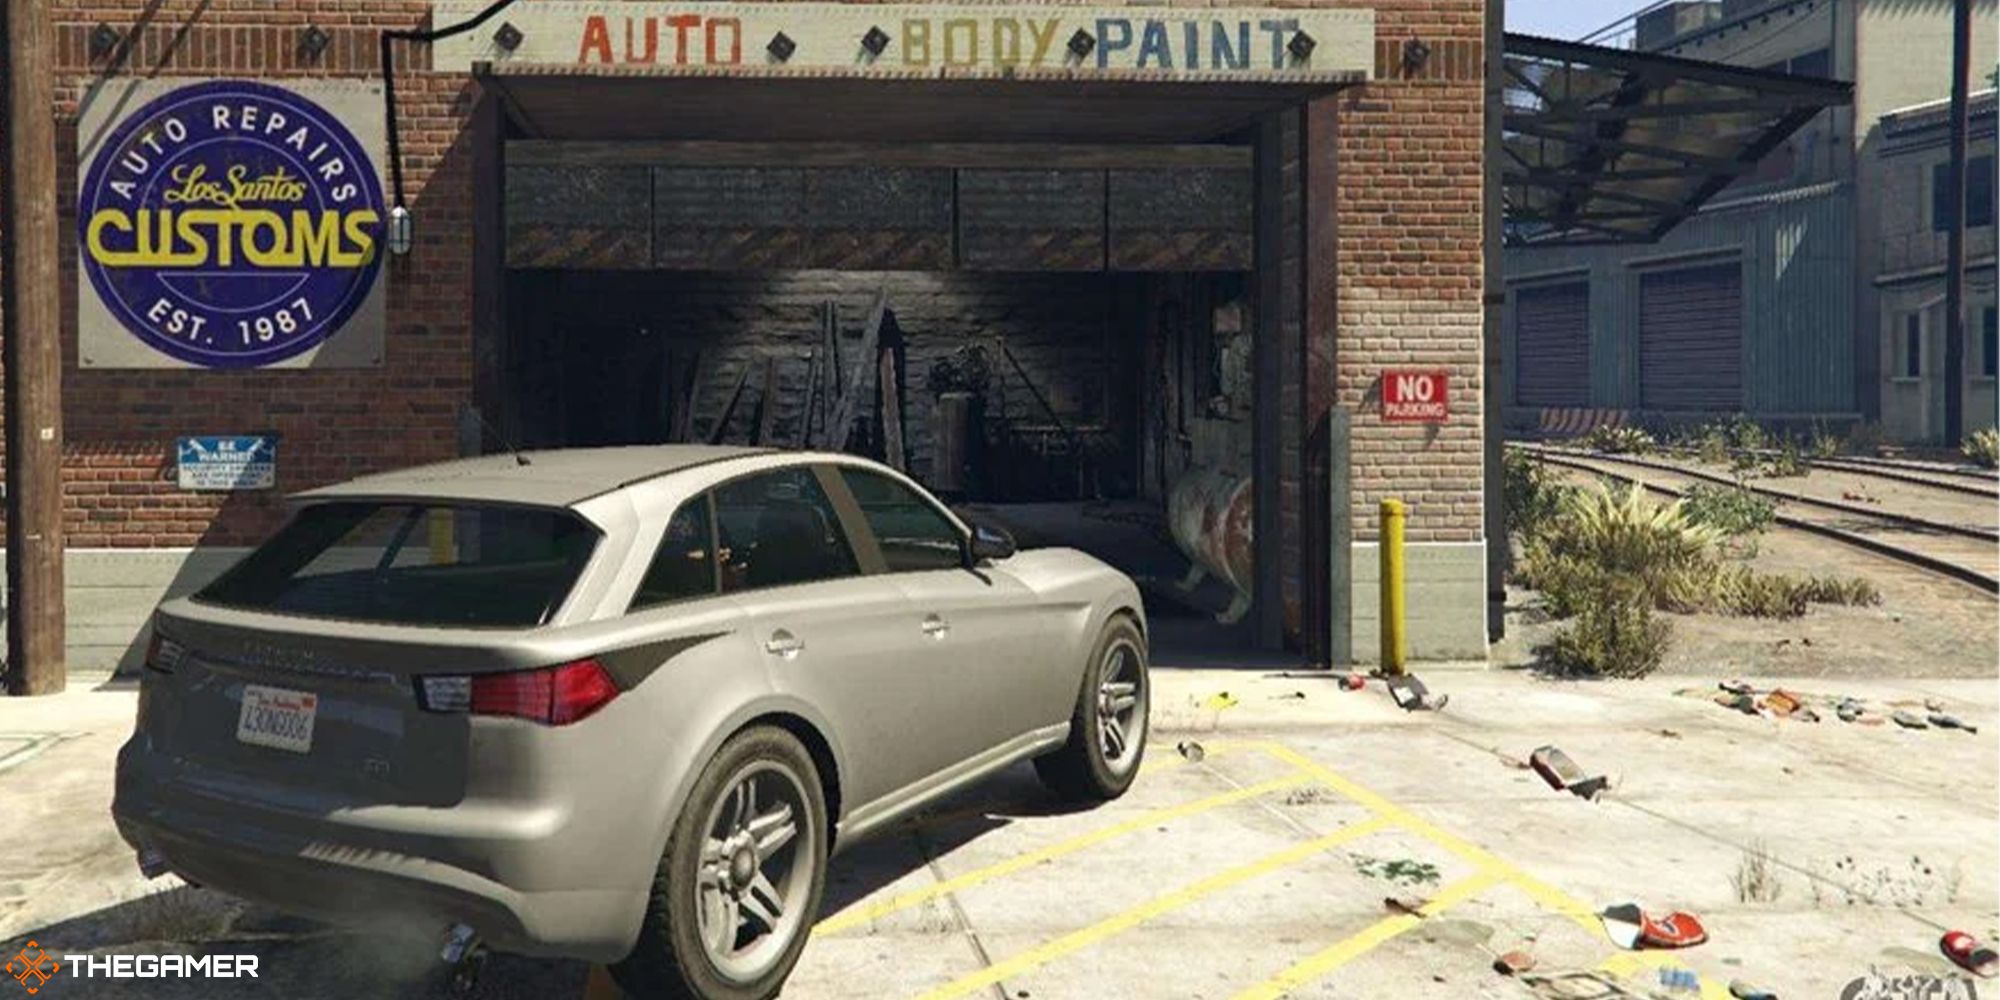 GTA Online - Car outside a body shop